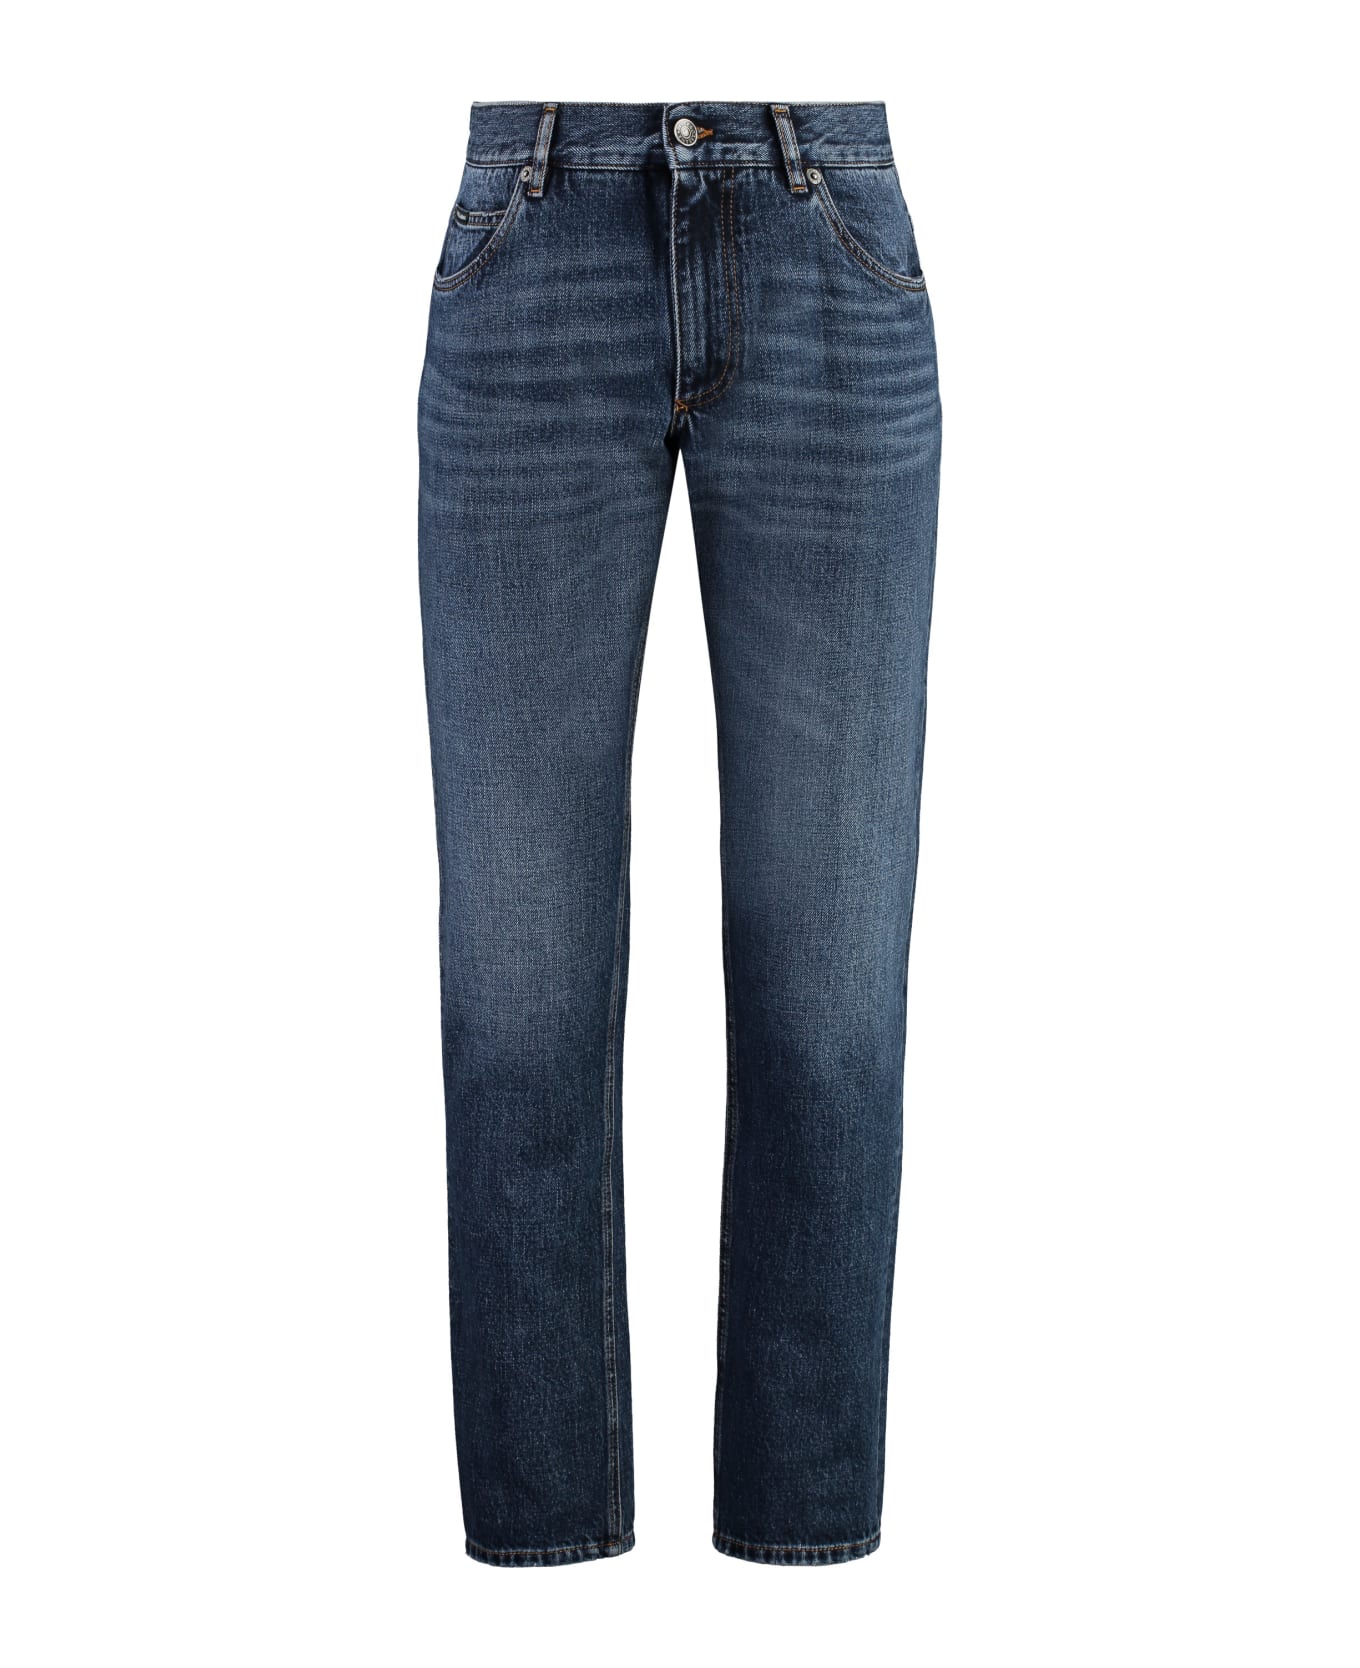 Dolce & Gabbana Regular Fit Jeans - VARIANTE ABBINATA